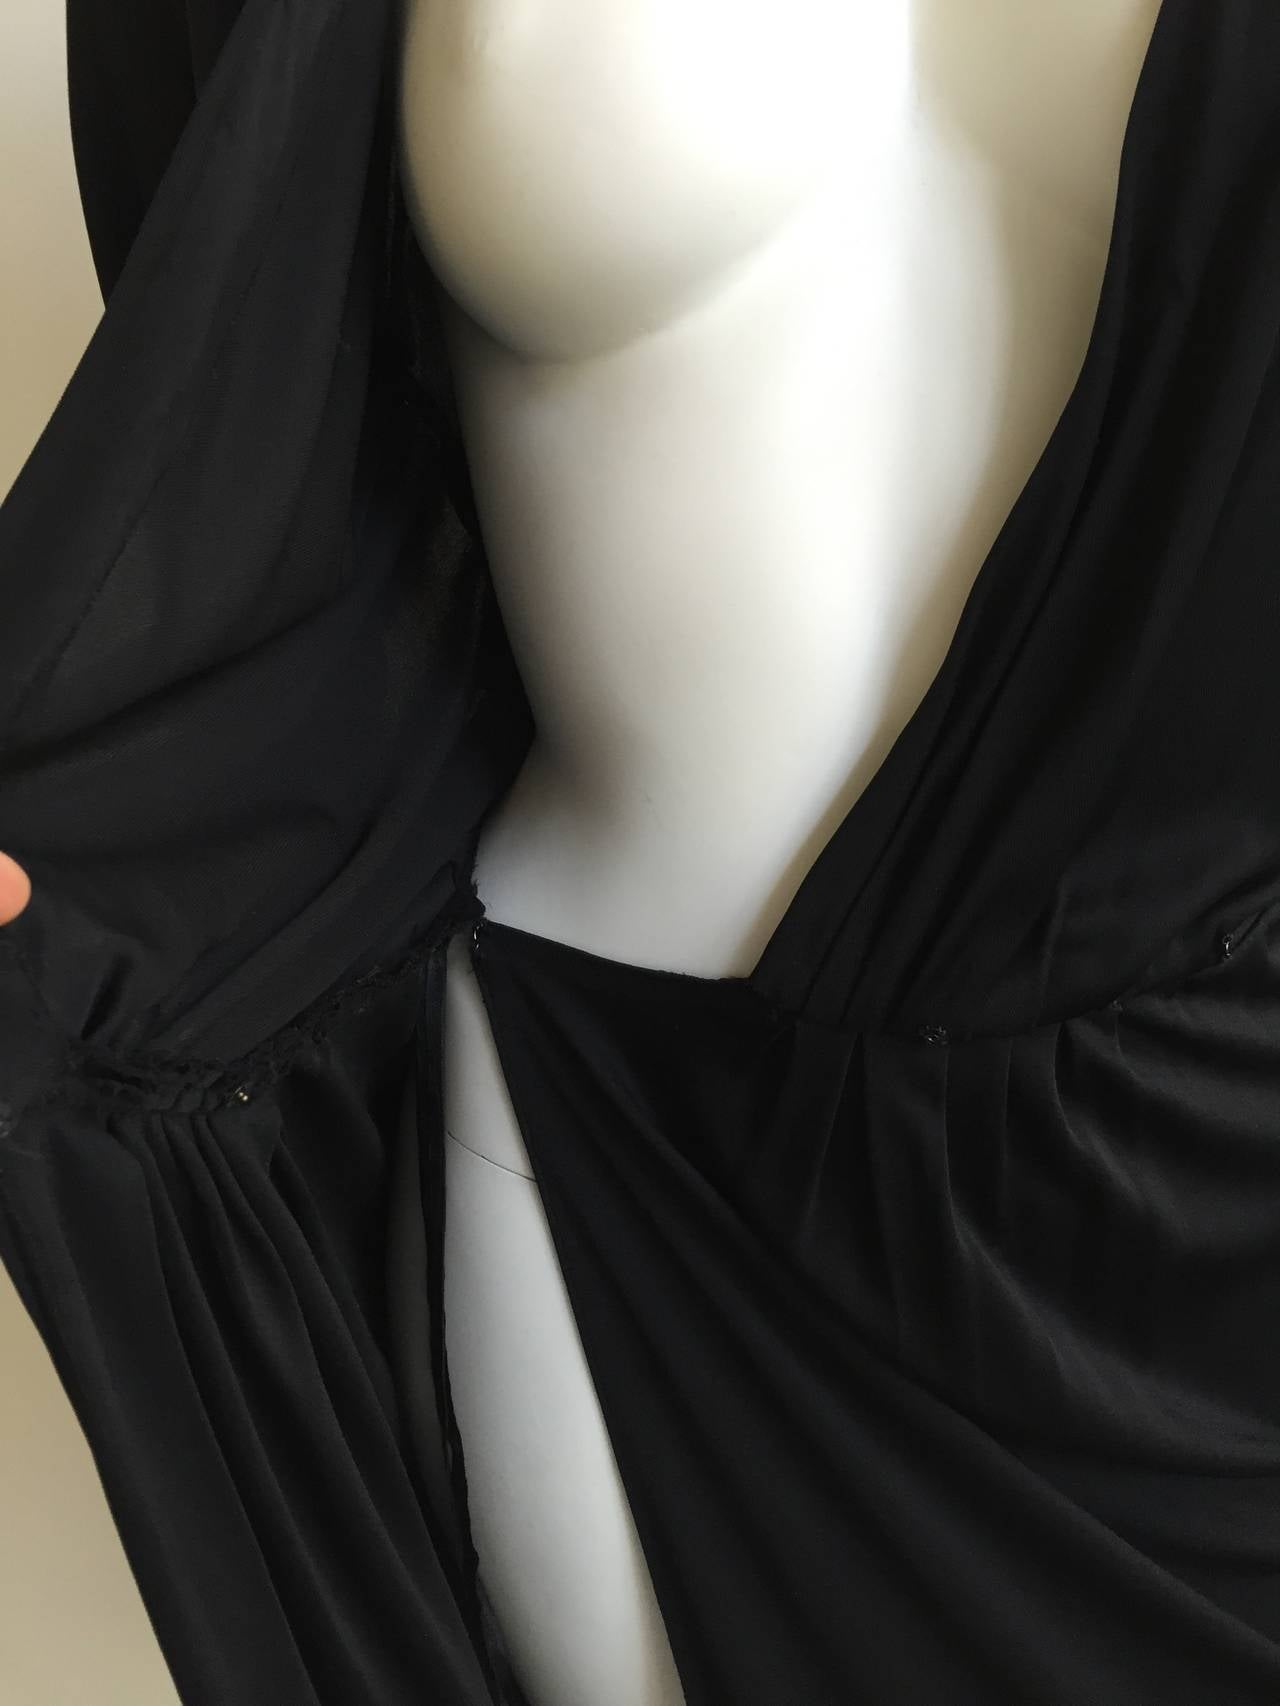 Halston 70s Black Wrap Dress size 4. 3